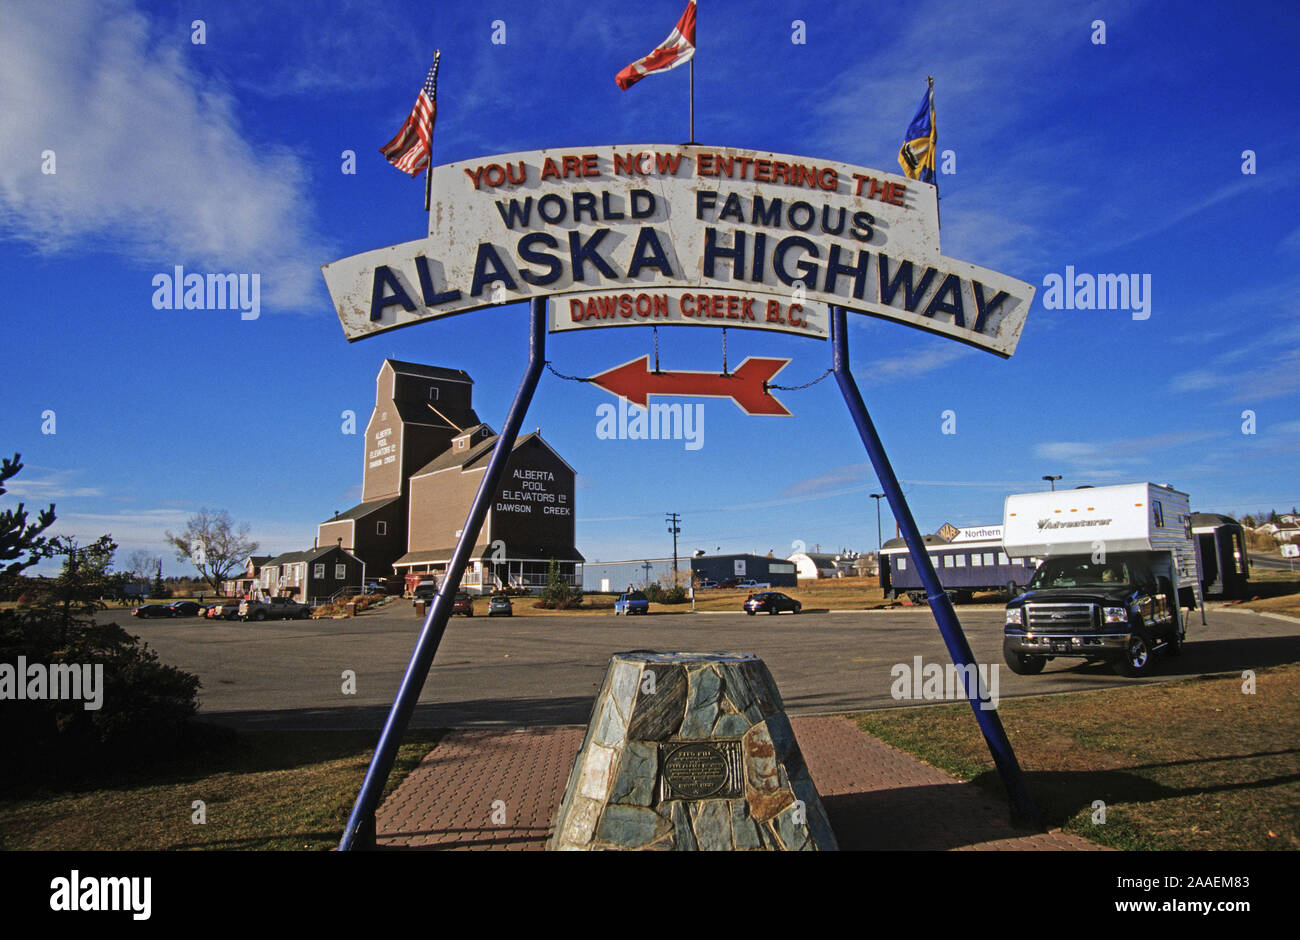 Der Anfang oder Mile 0 des Alaska Highways - Dawson Creek, Kanada Stock Photo